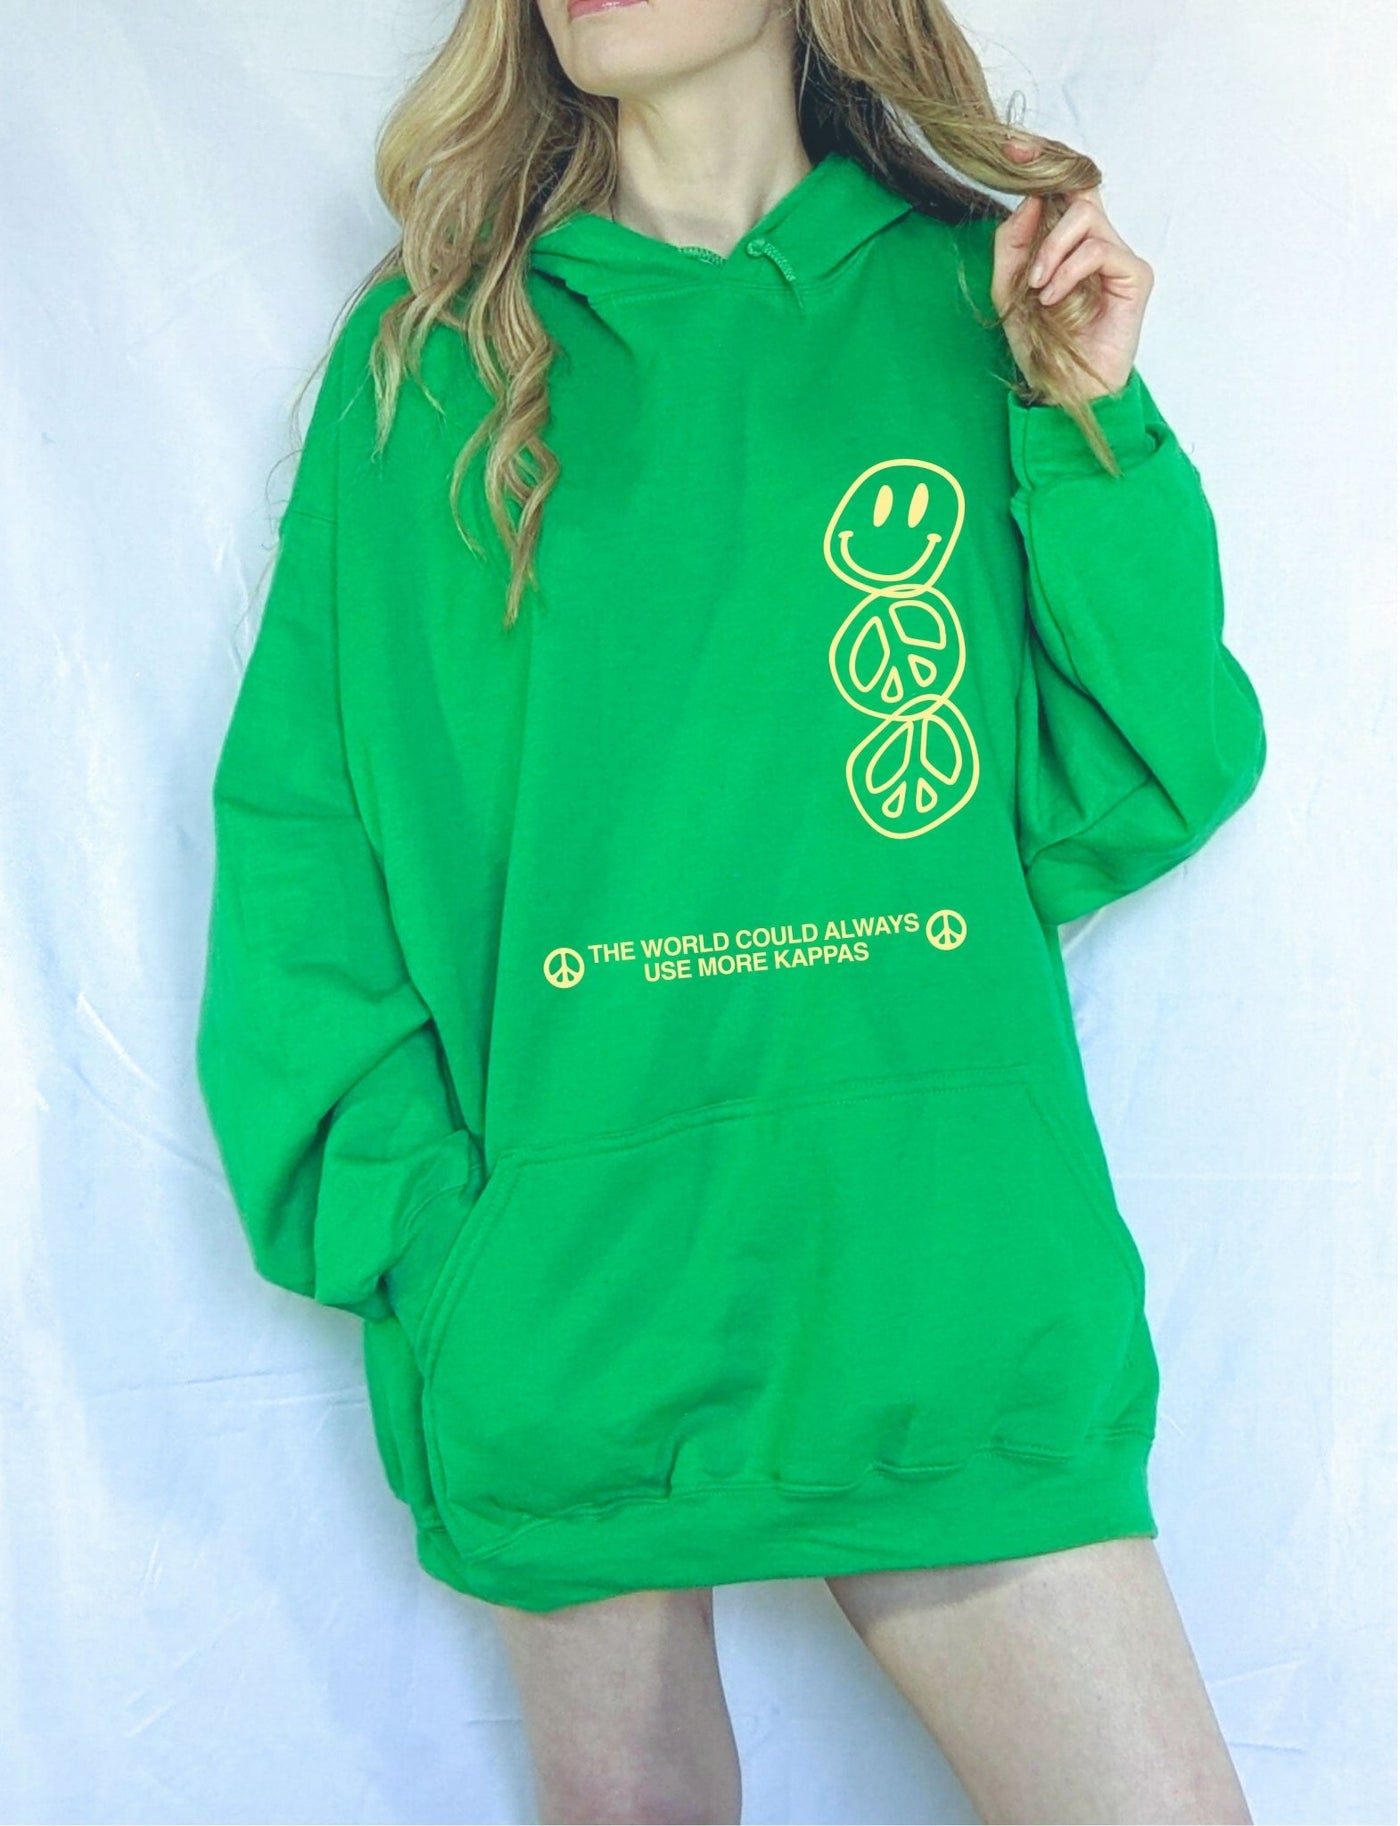 Happy to Be Kappa Sorority Sweatshirt | Kappa Kappa Gamma Trendy Sorority Hoodie